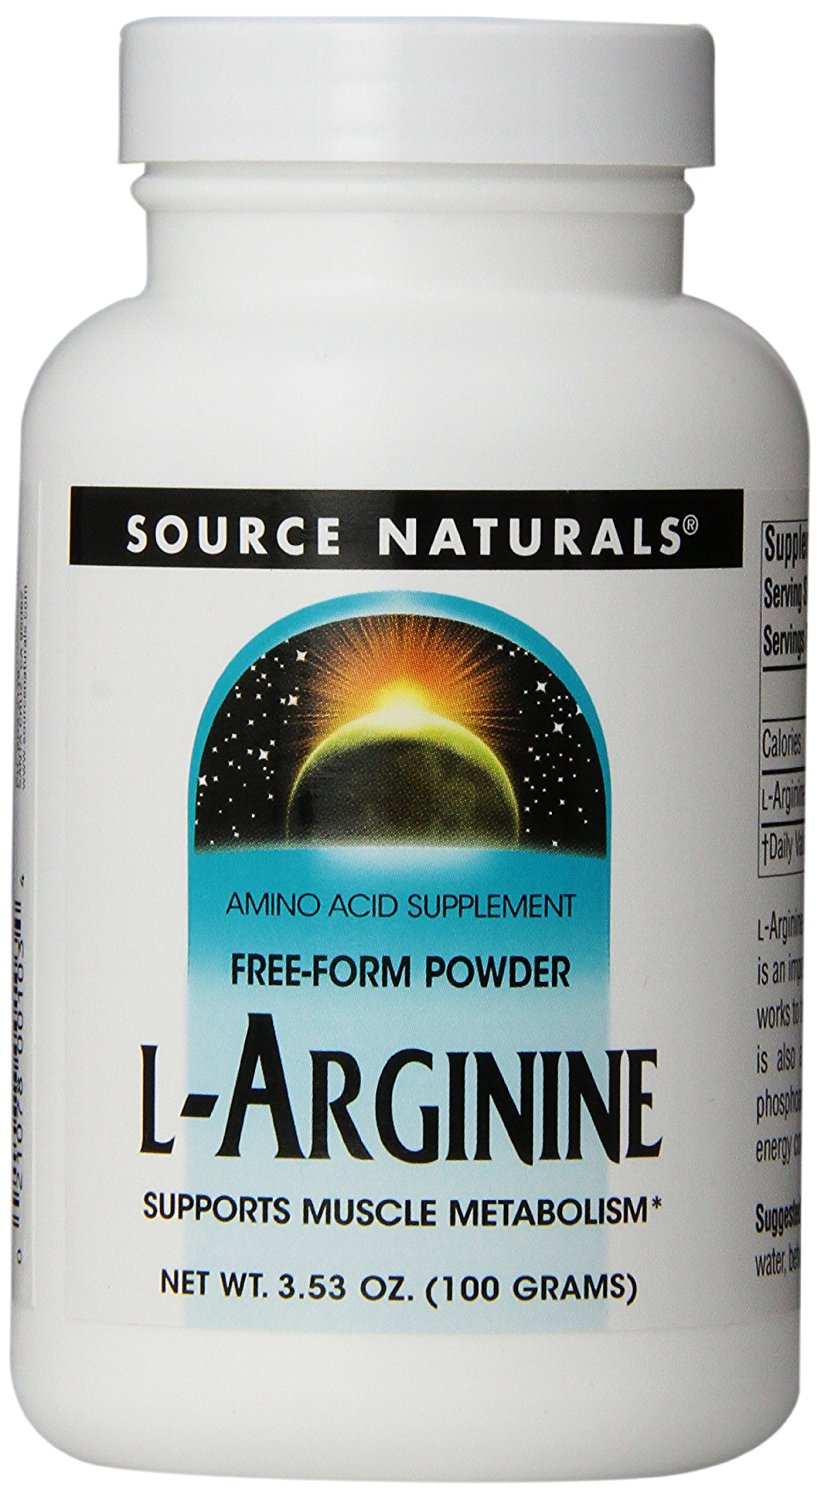 source-naturals-l-arginine-free-form-powder-3-53-oz-100-g